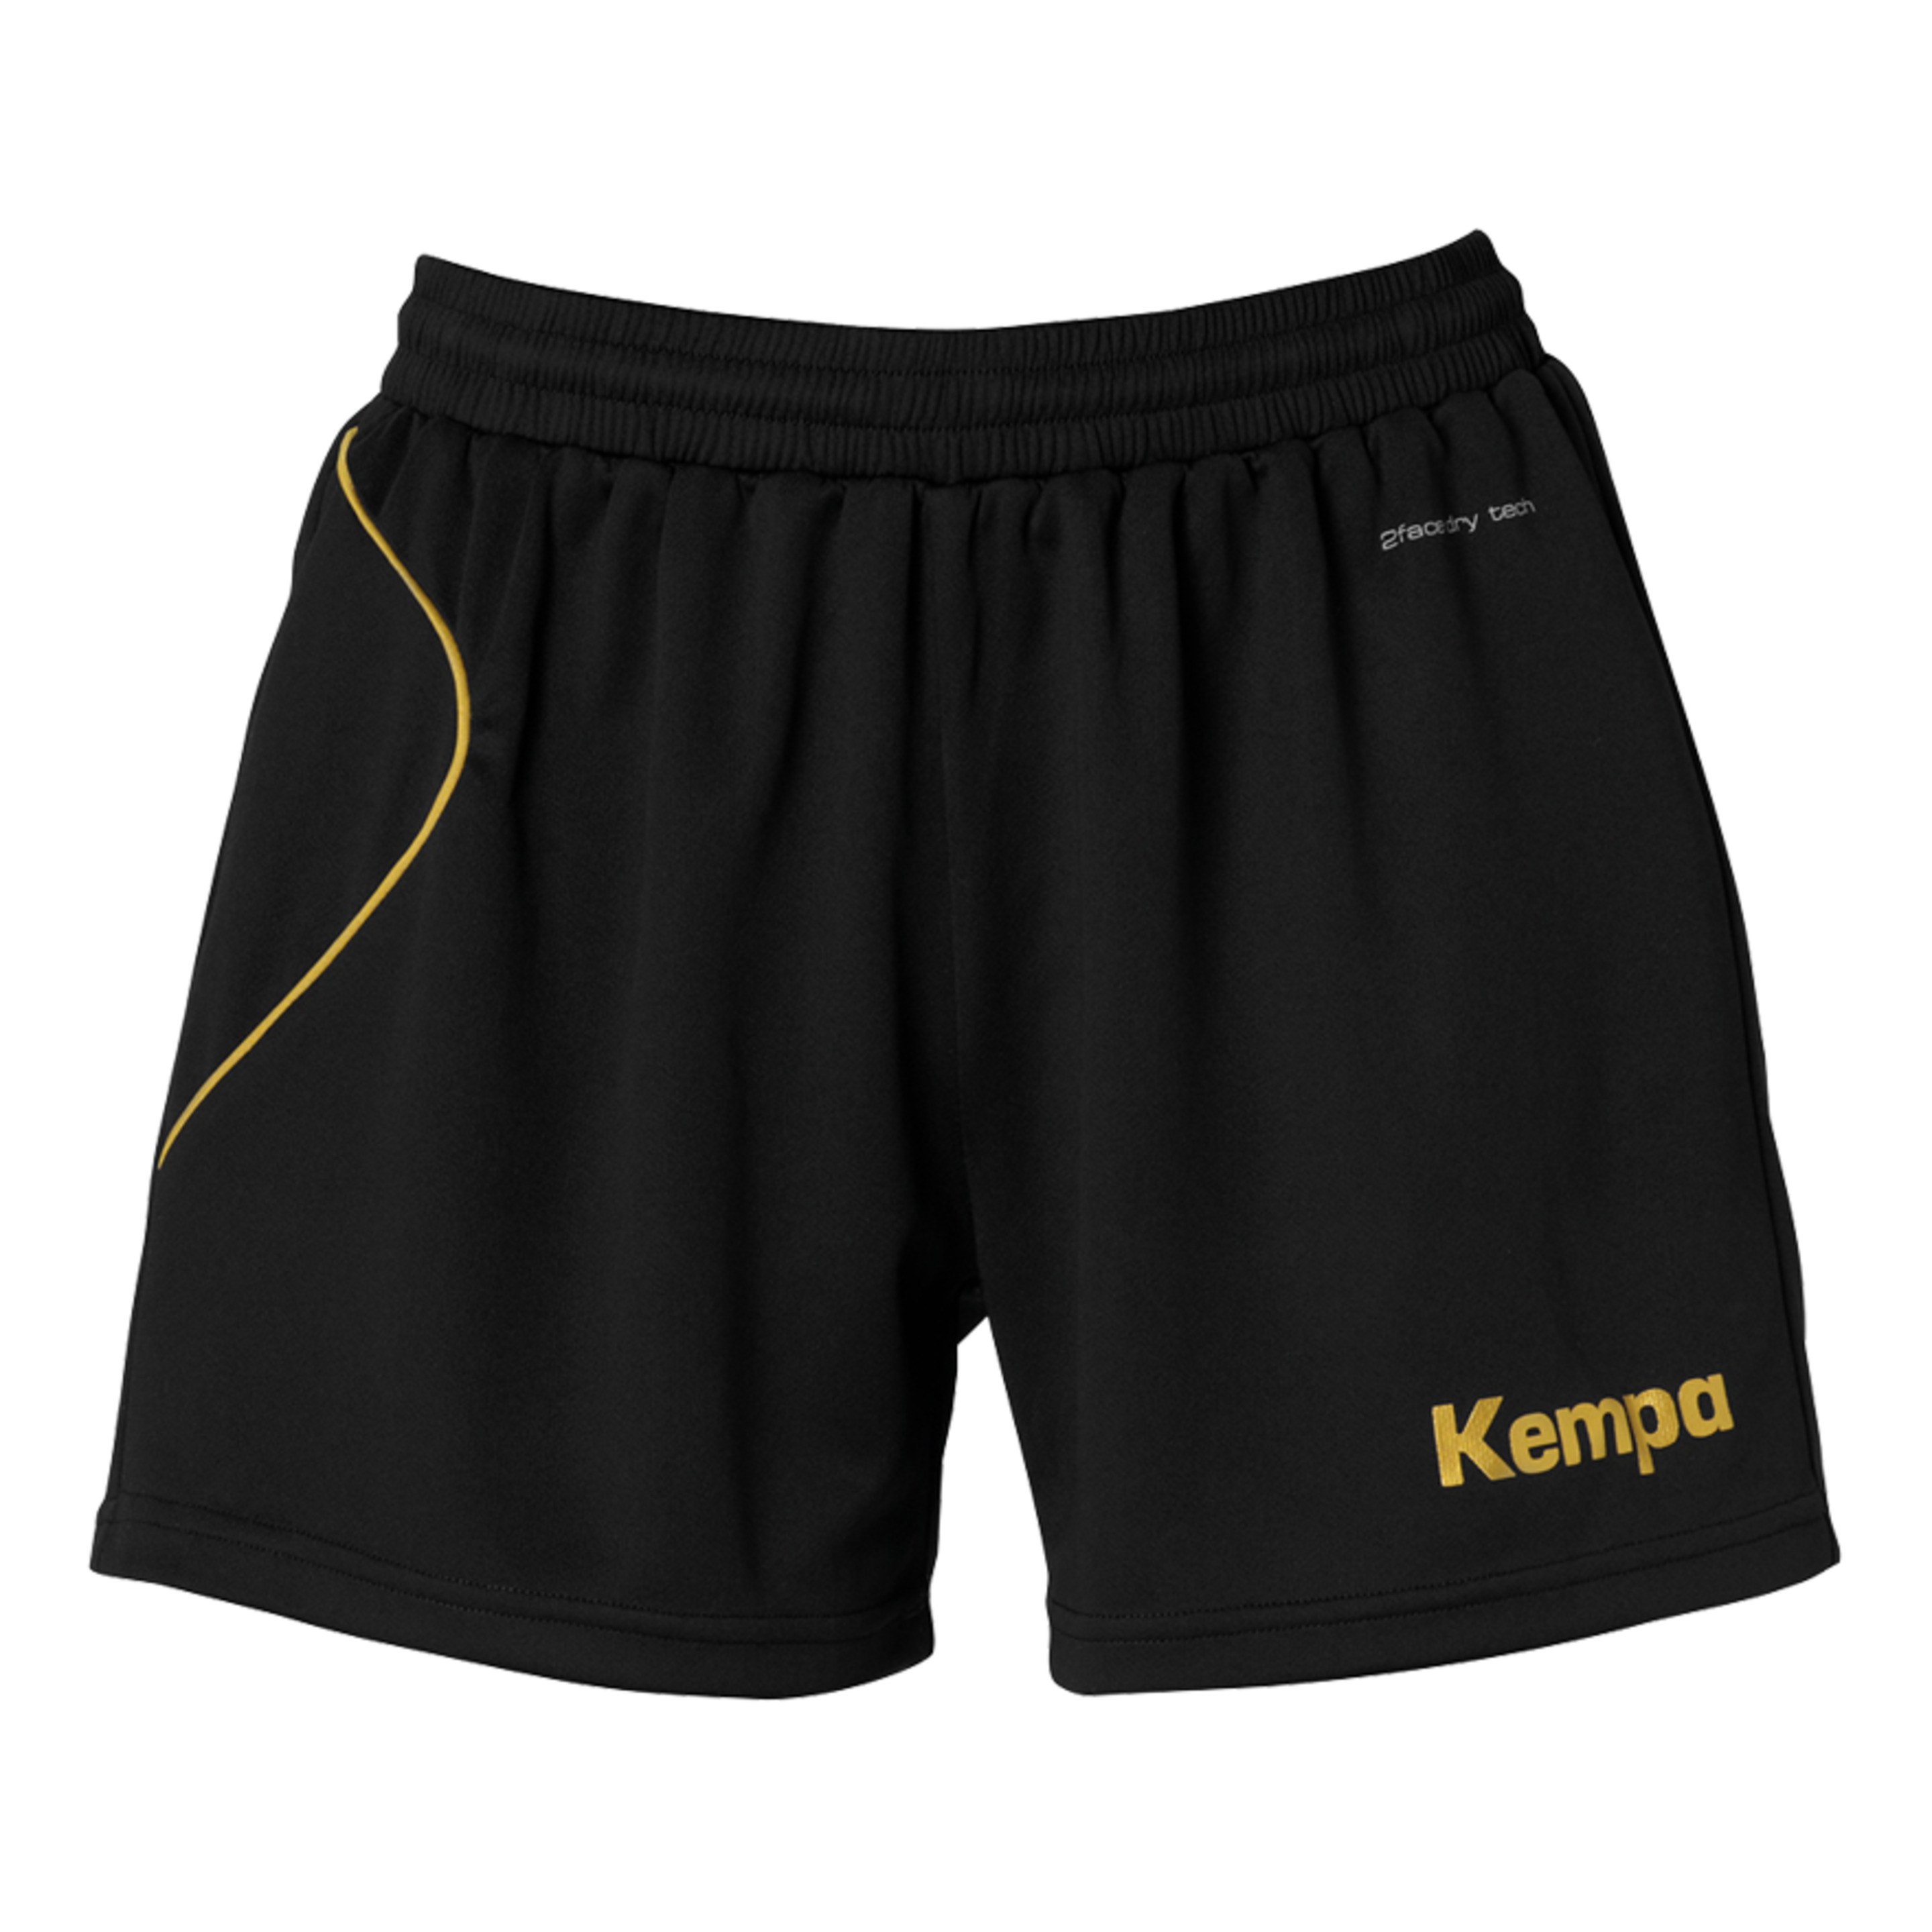 Curve Shorts De Mujer Negro/dorado Kempa